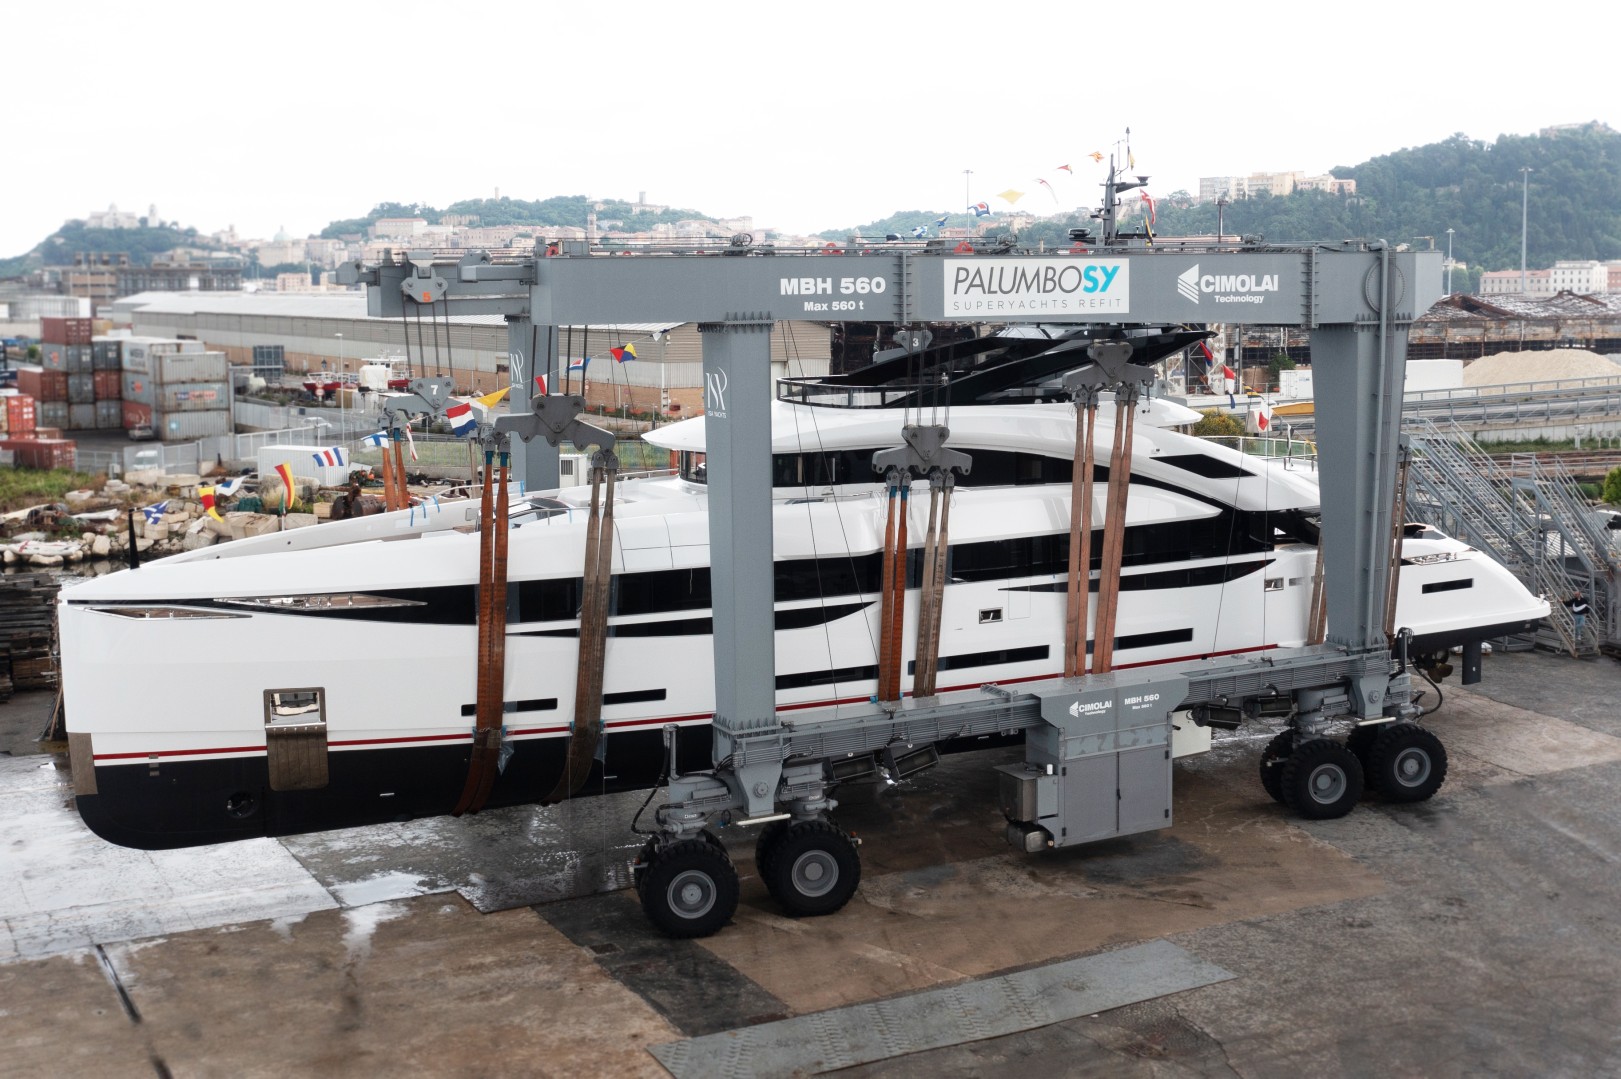 ISA Yachts: varo del nuovo ISA Gran Turismo 45 metri M/Y UV II